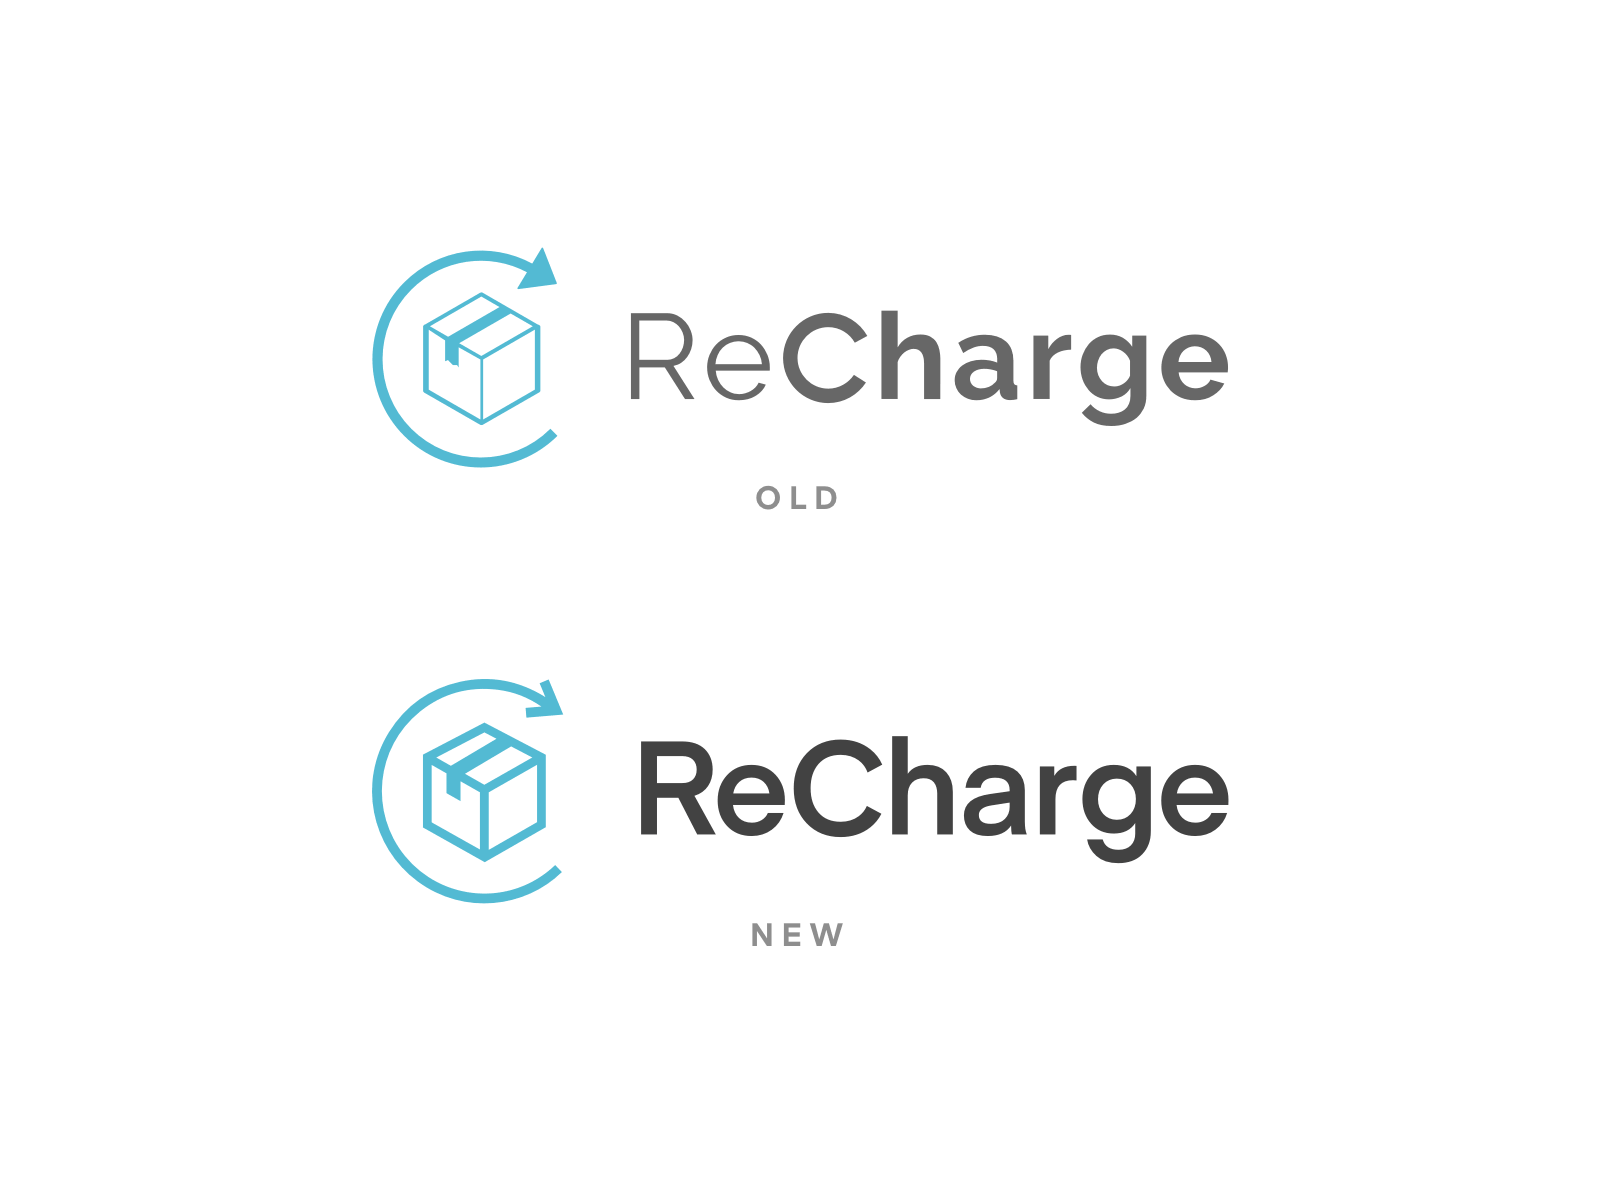 ReCharge logo revamp